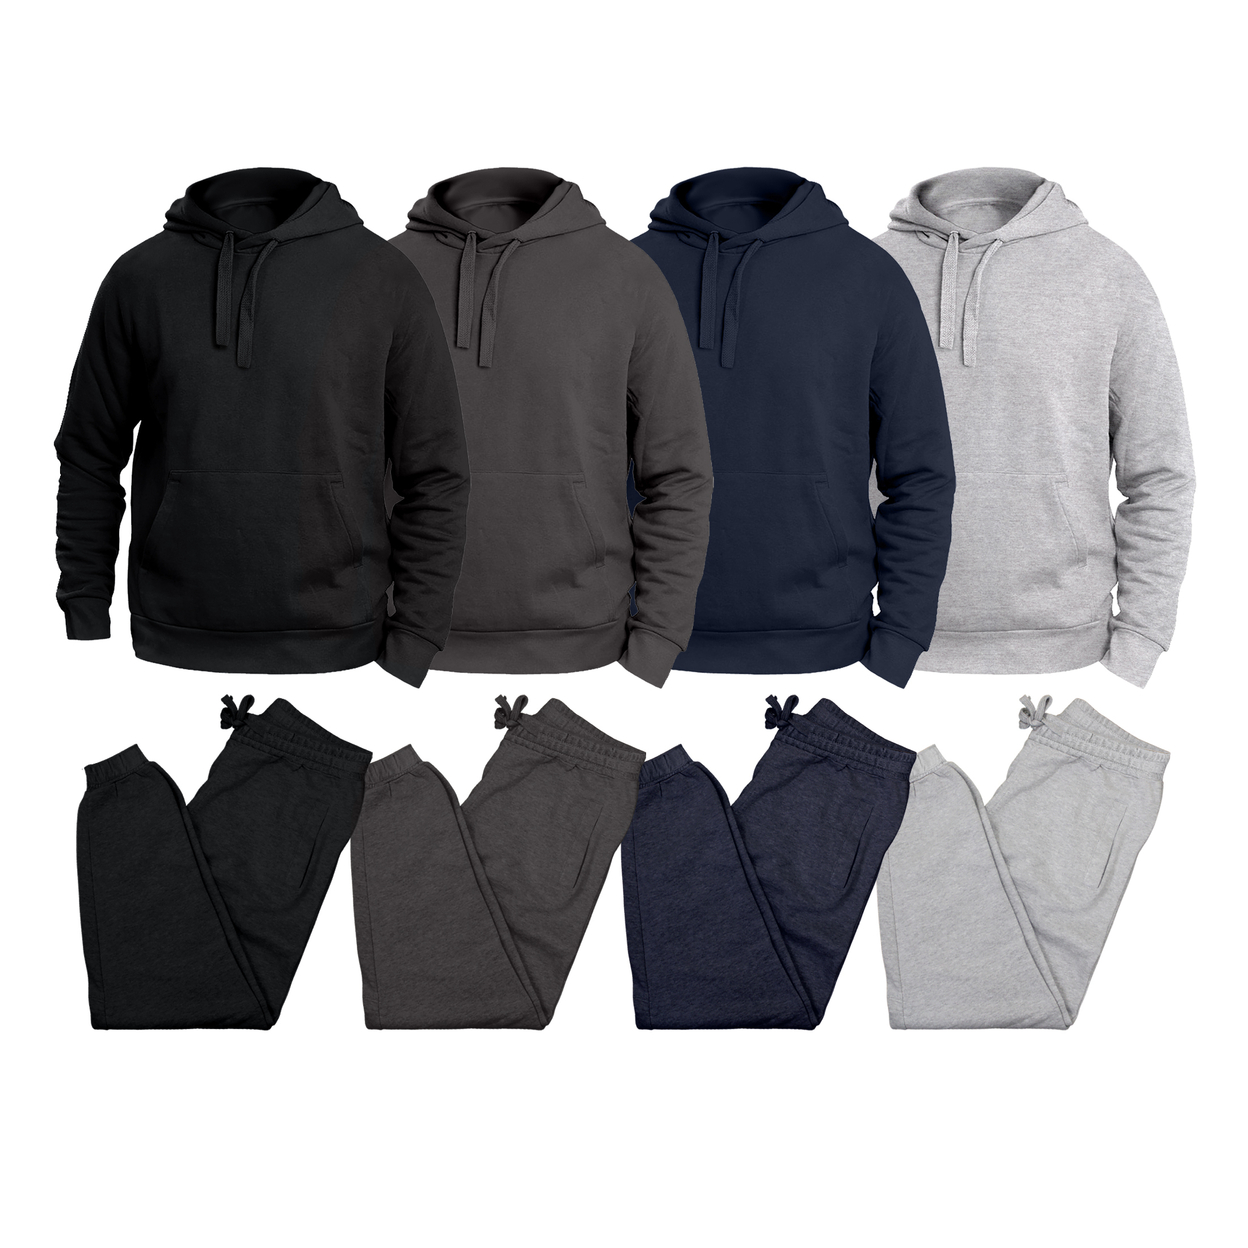 Multi-Pack: Big & Tall Men's Winter Warm Cozy Athletic Fleece Lined Multi-Pocket Cargo Sweatsuit - Charcoal, 2-pack, Medium